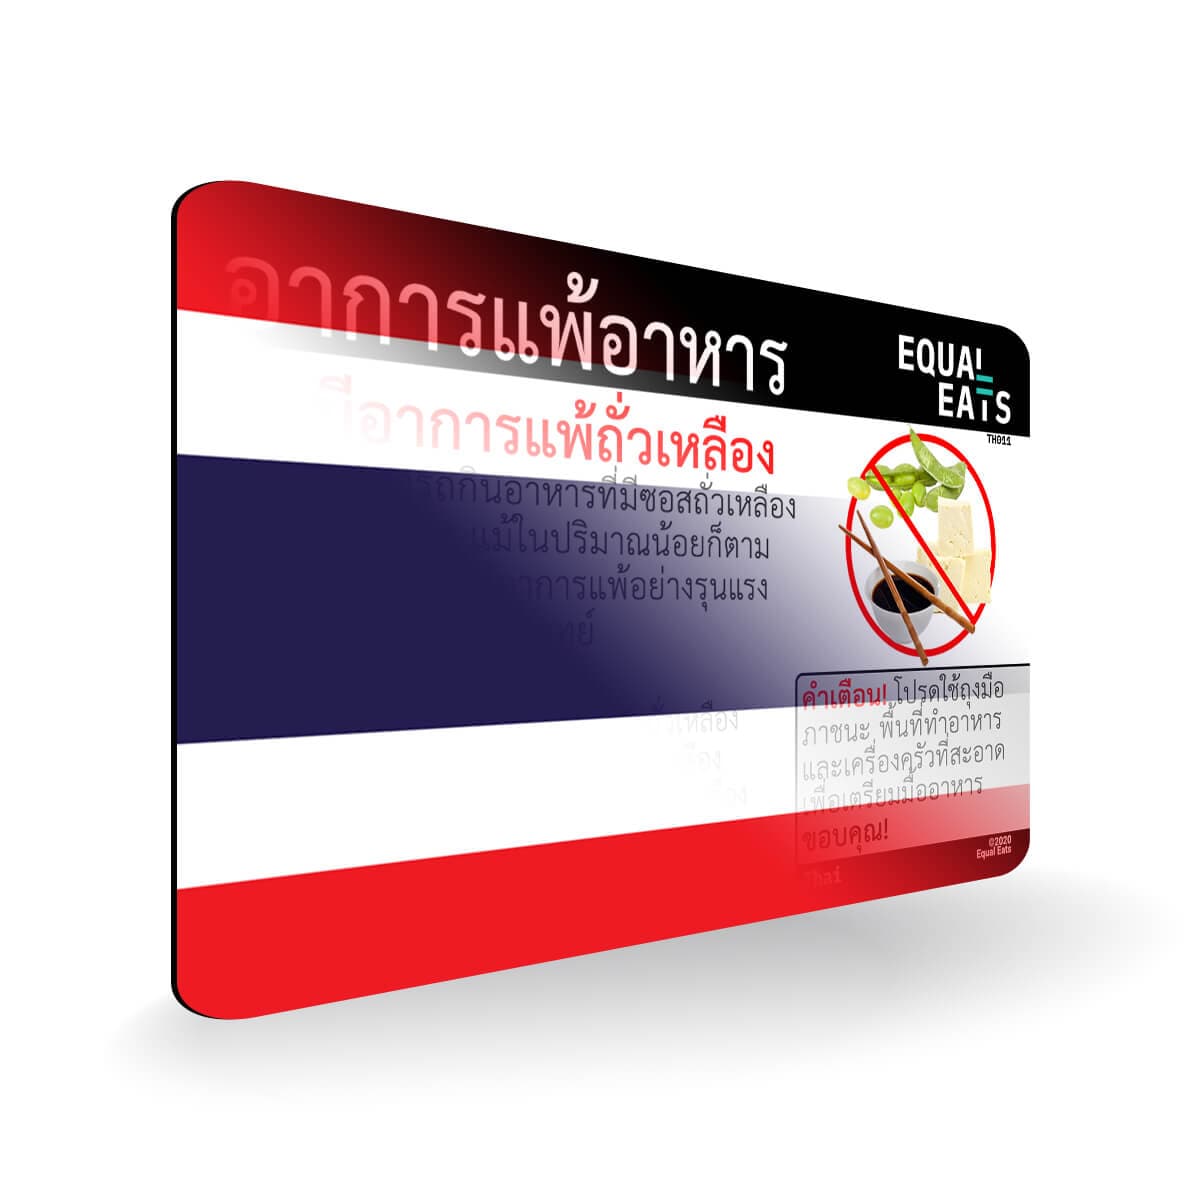 Soy Allergy in Thai. Soy Allergy Card for Thailand